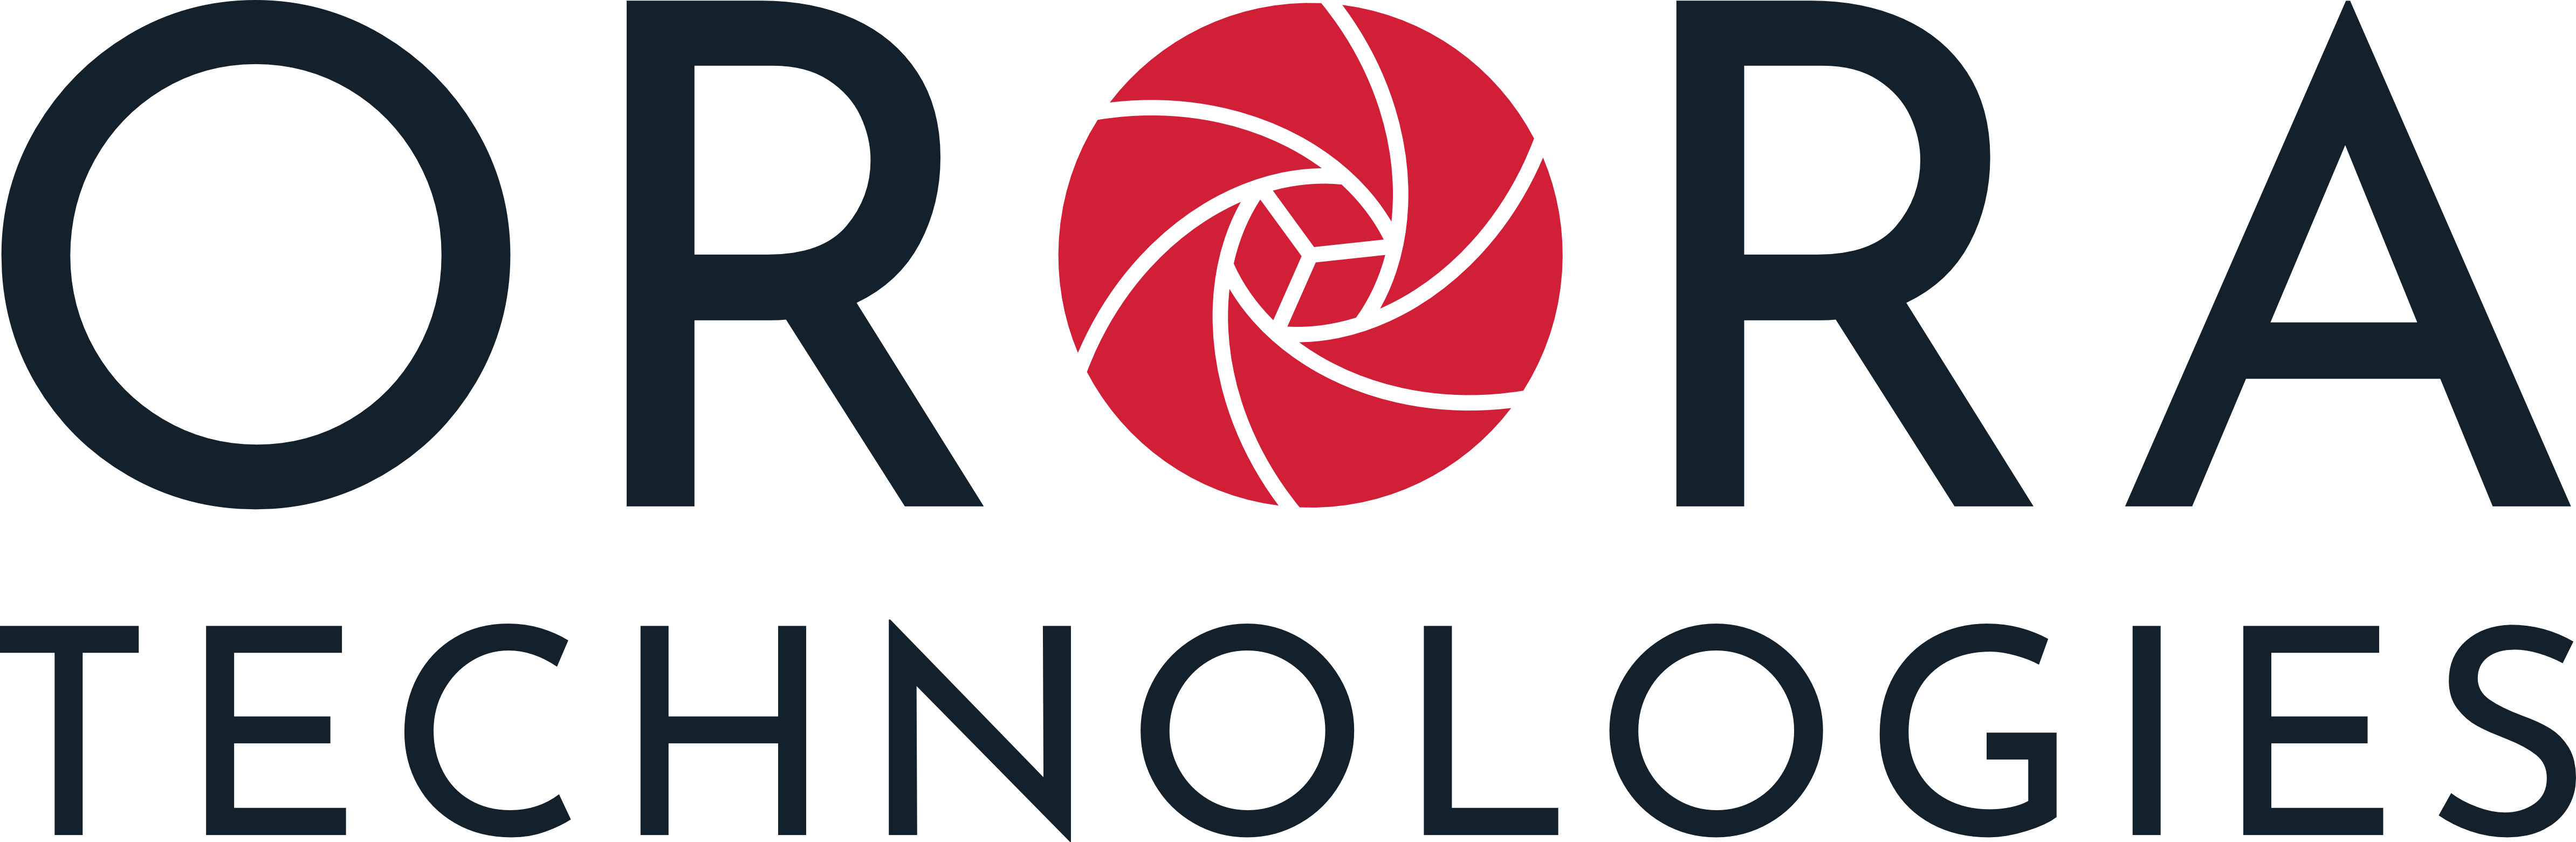 logo-orora-standard-red